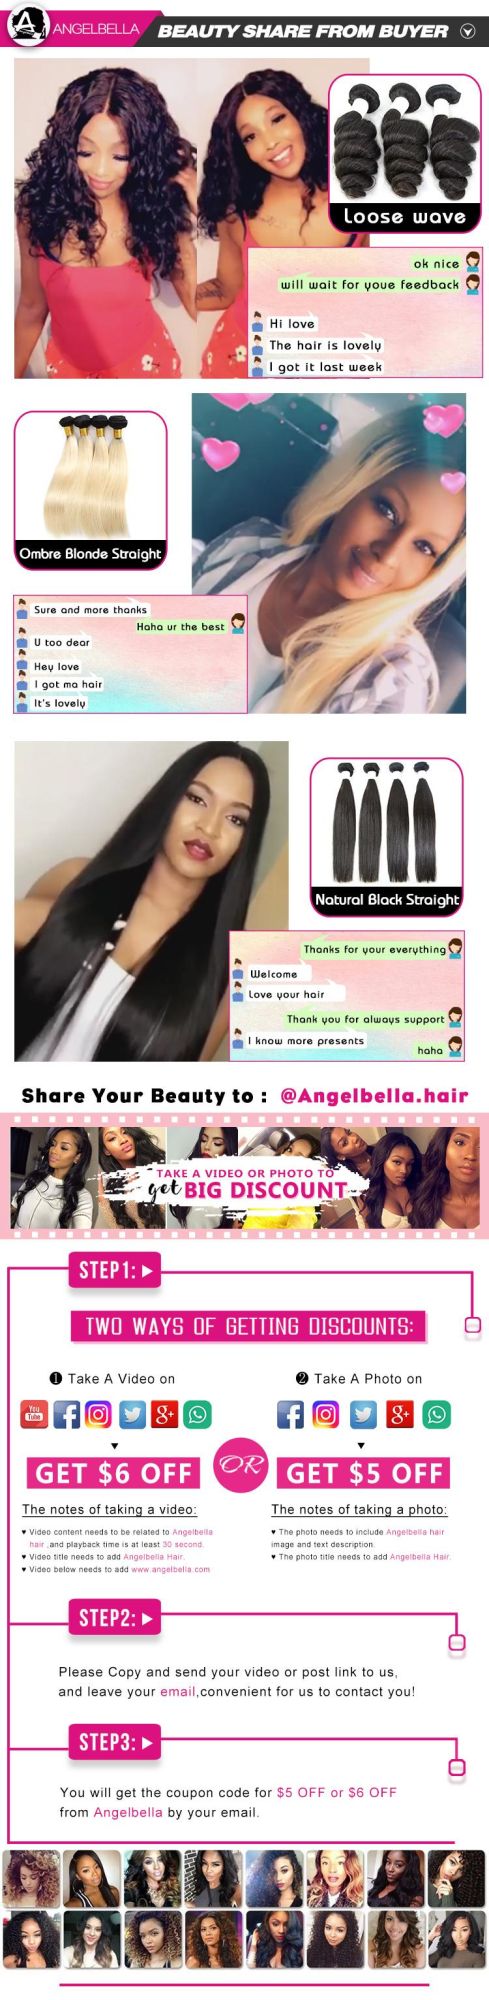 Angelbella Silky Straight Chinese Virgin Human Hair 1b#-Green Remy Hair Weft